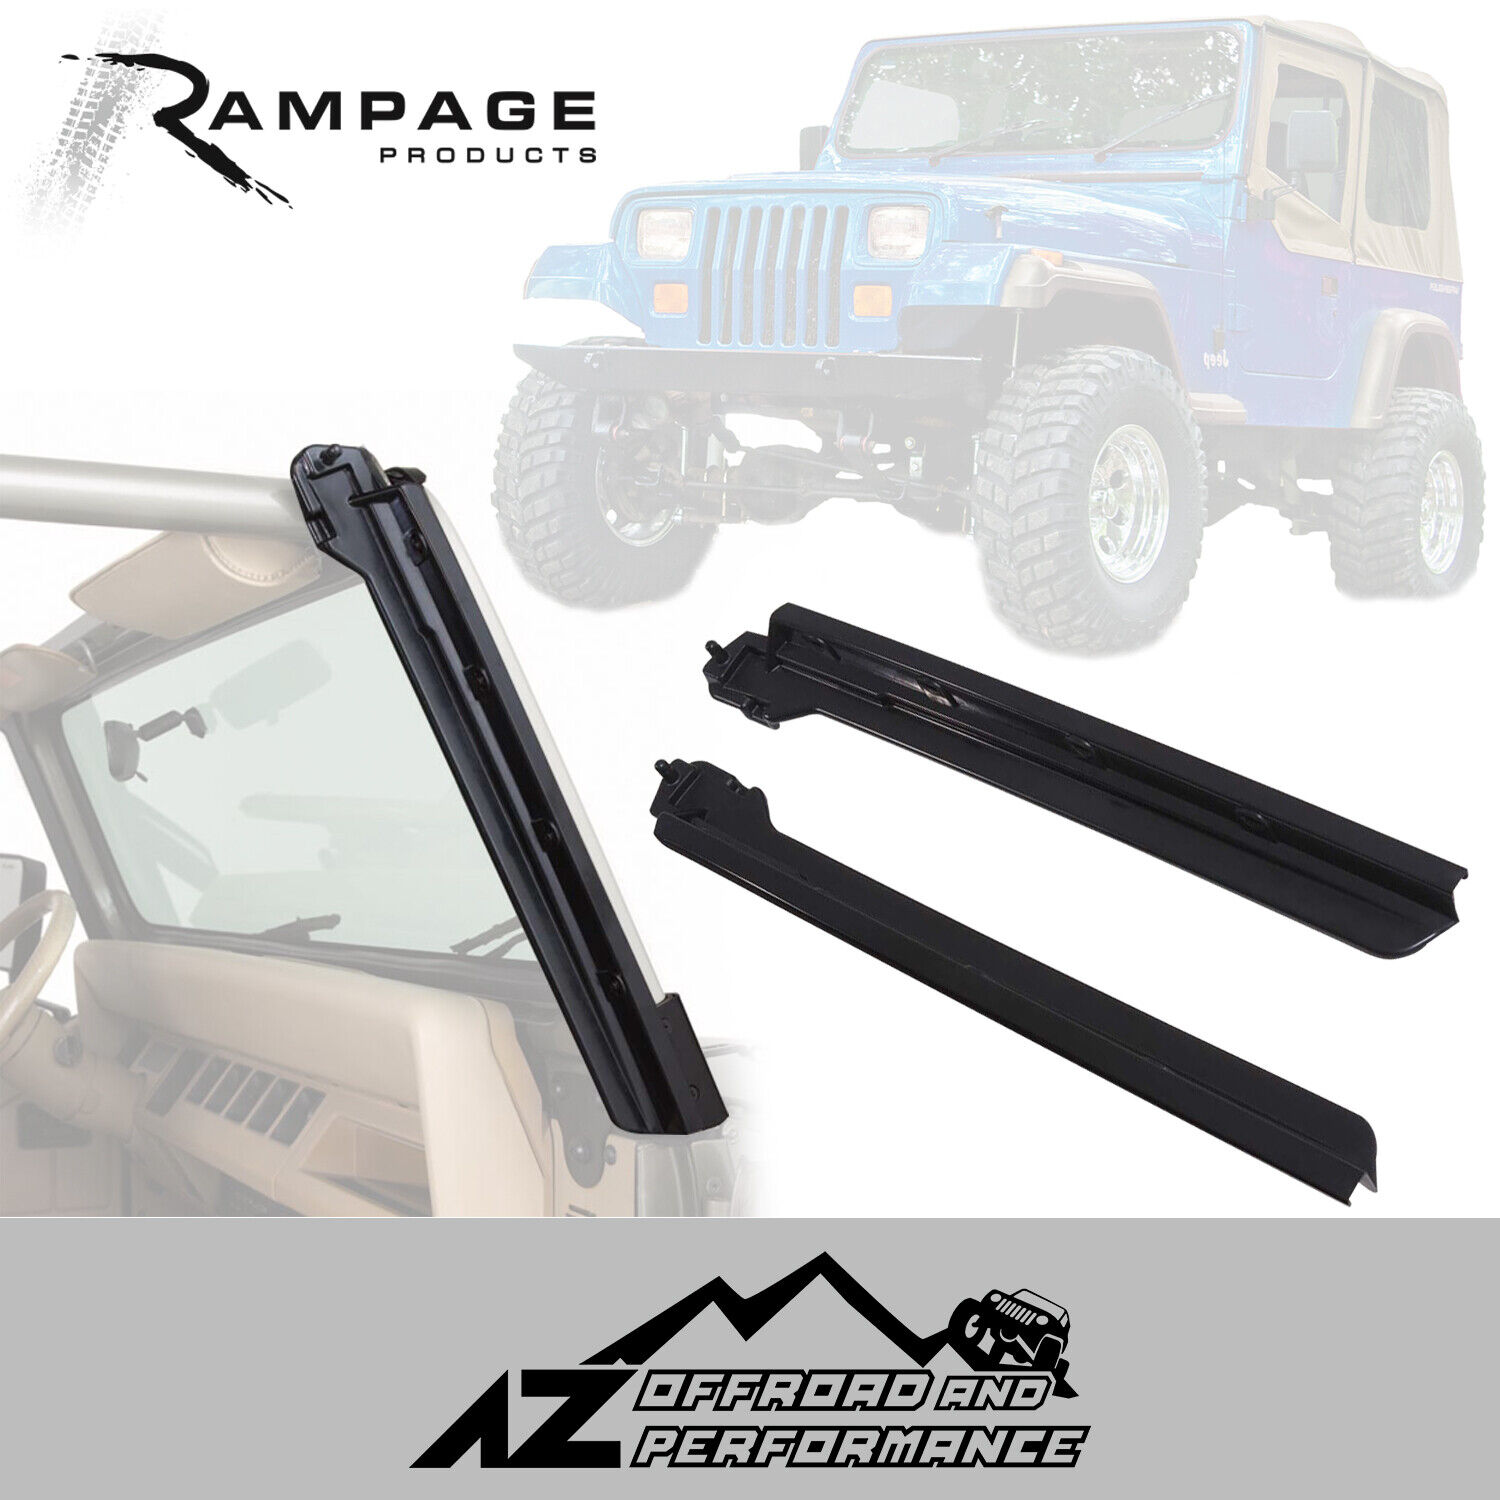 Rampage Windshield Uprights fits 1987-1995 Jeep Wrangler YJ 69998 Black